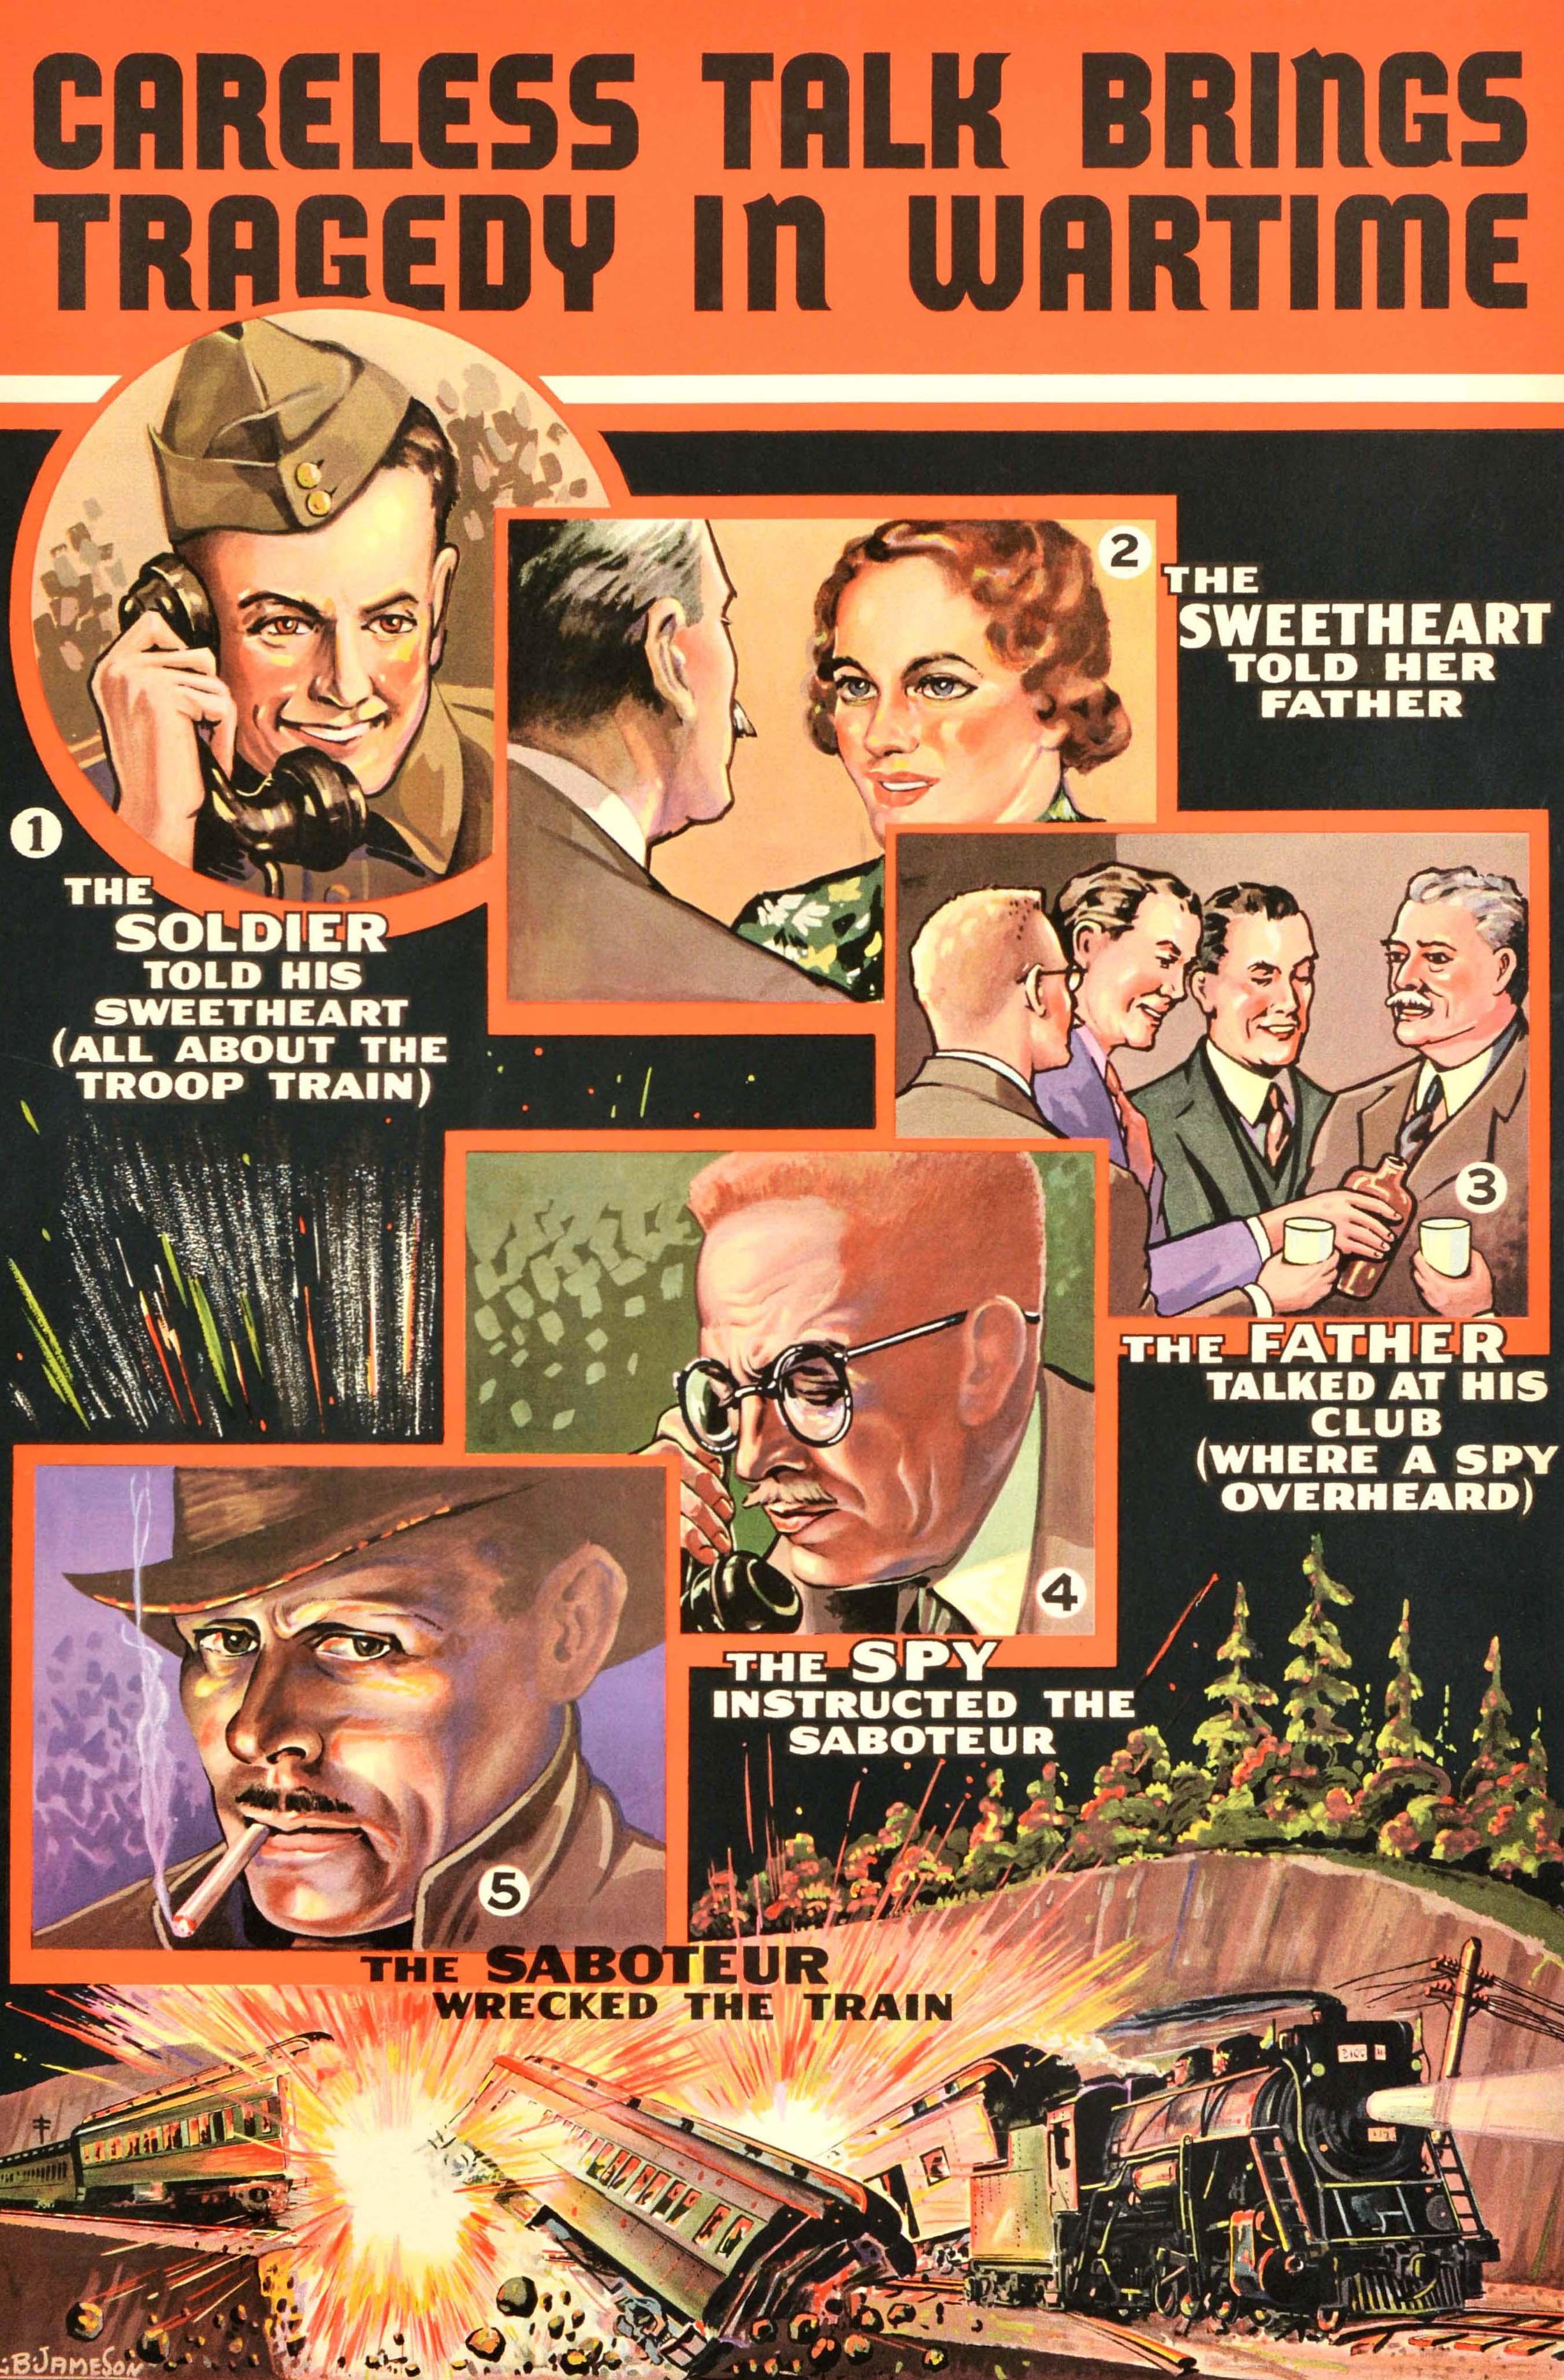 Original Vintage WWII Warning Propaganda Poster Careless Talk Tragedy Wartime - Print by Unknown